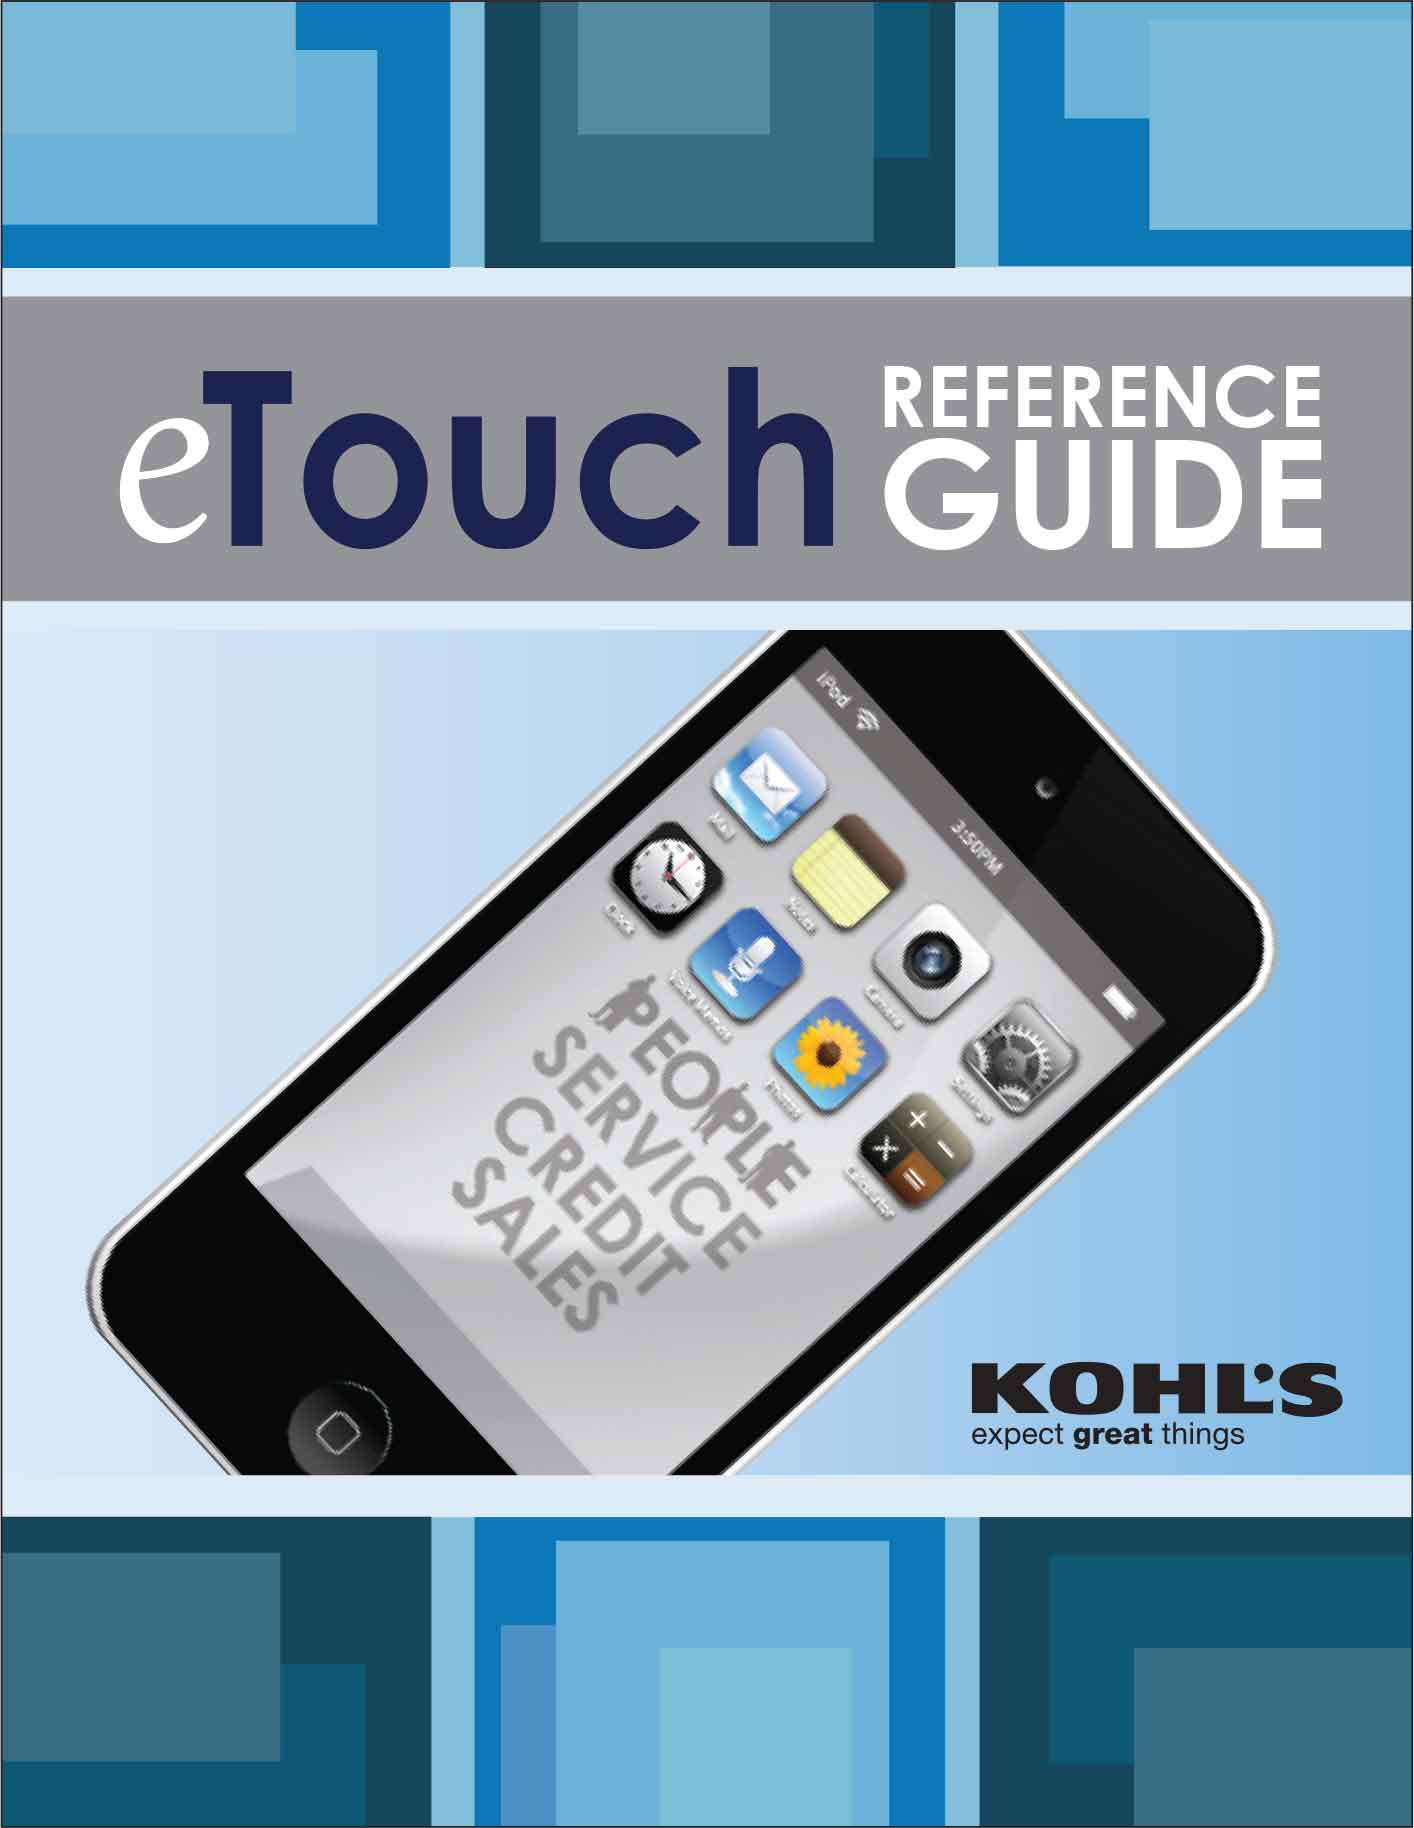 Desktop Publishing Magazine E Touch Sample Cover